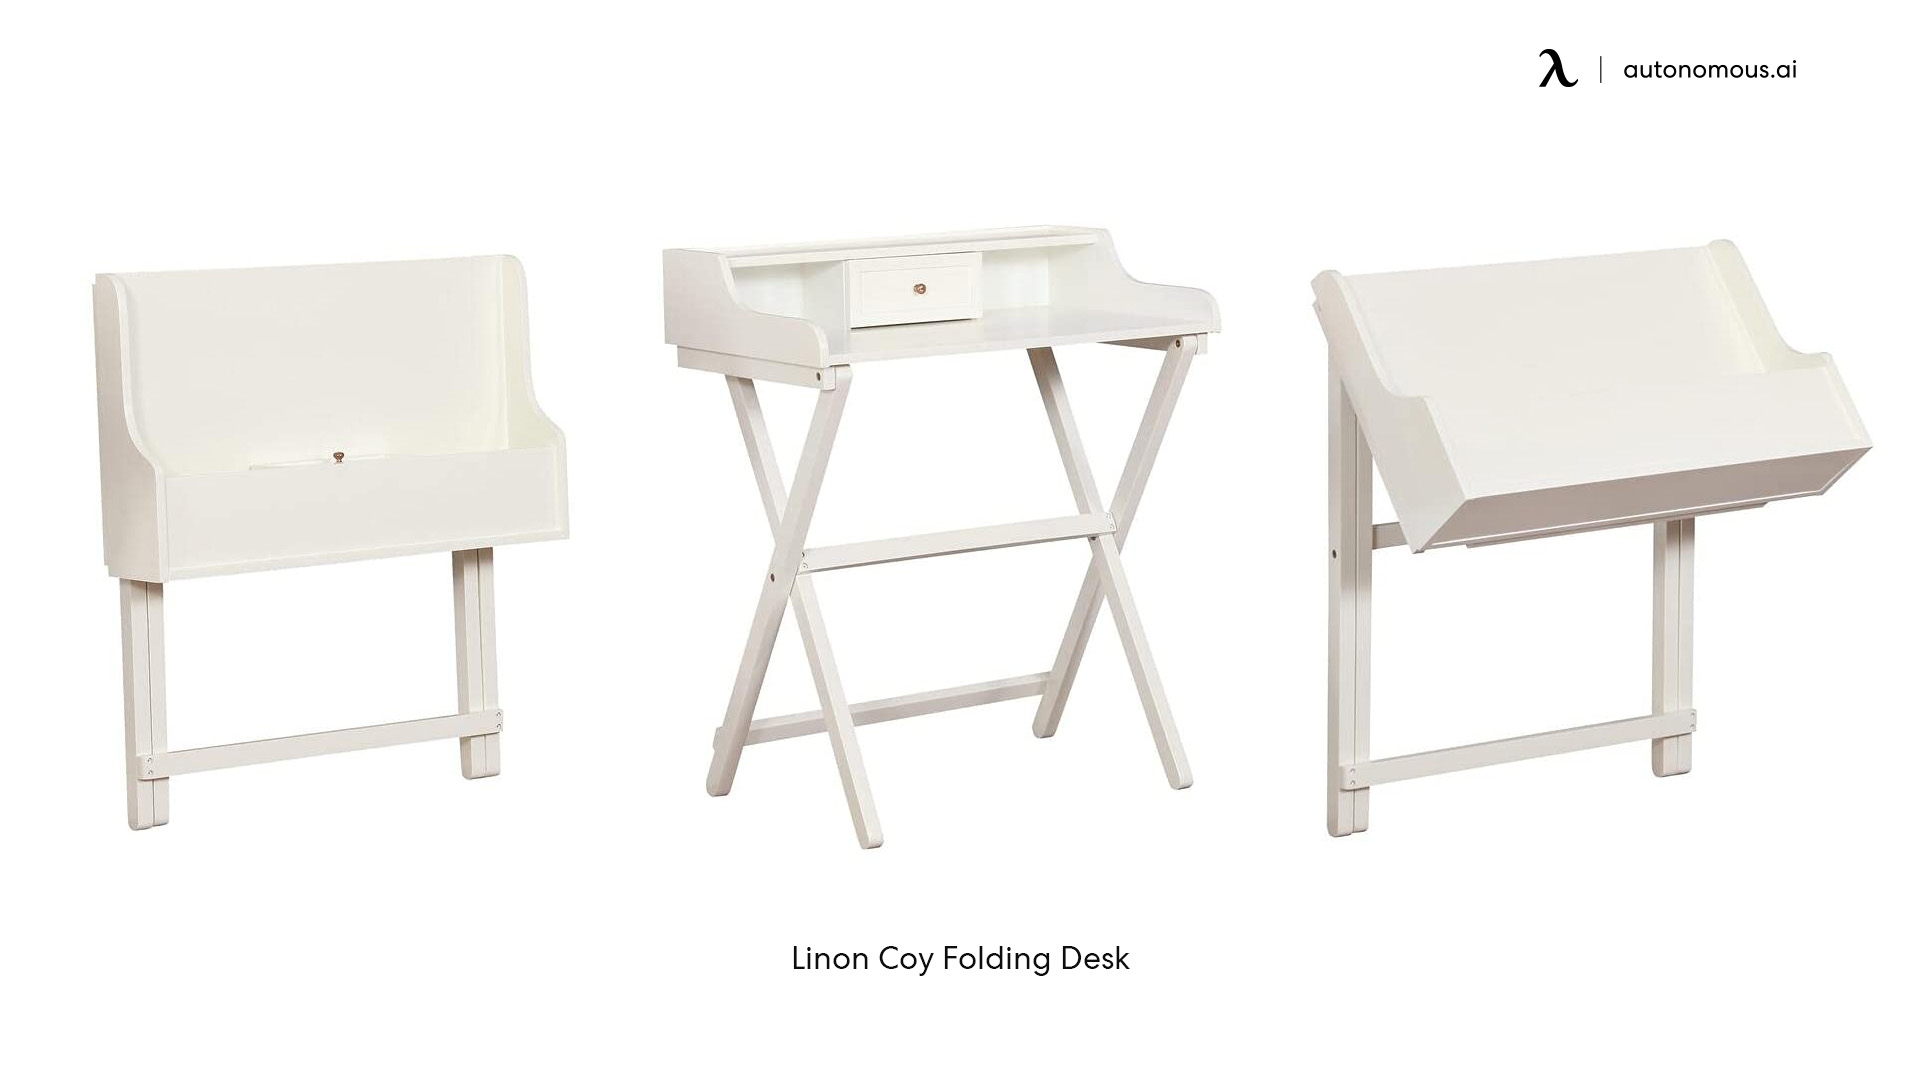 Linon Coy medium size desk